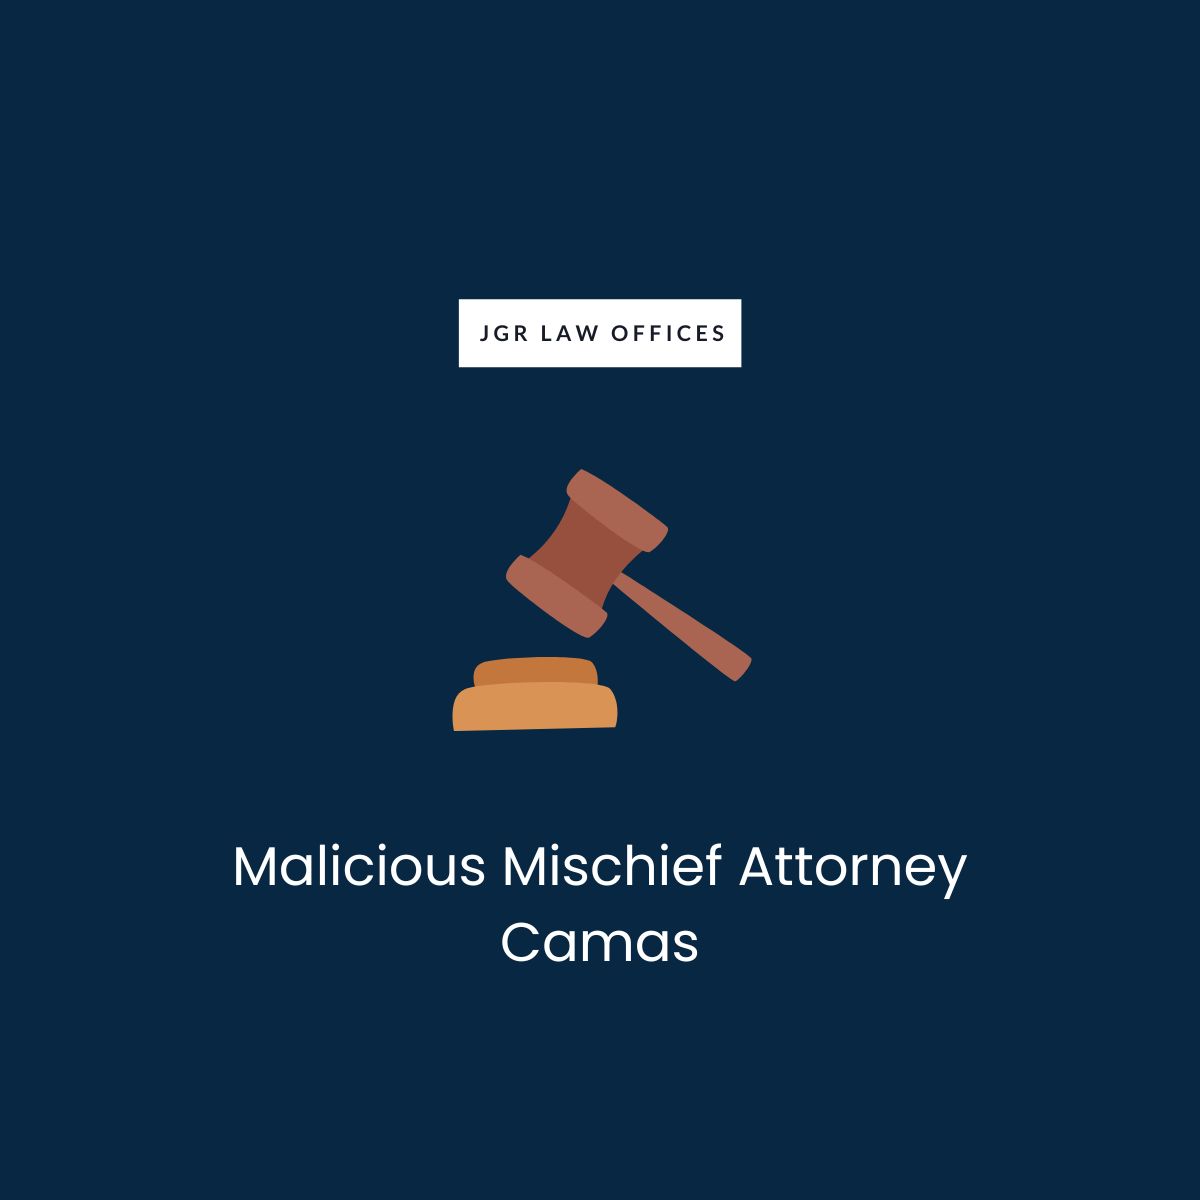 Malicious Mischief Lawyer Camas Malicious Mischief